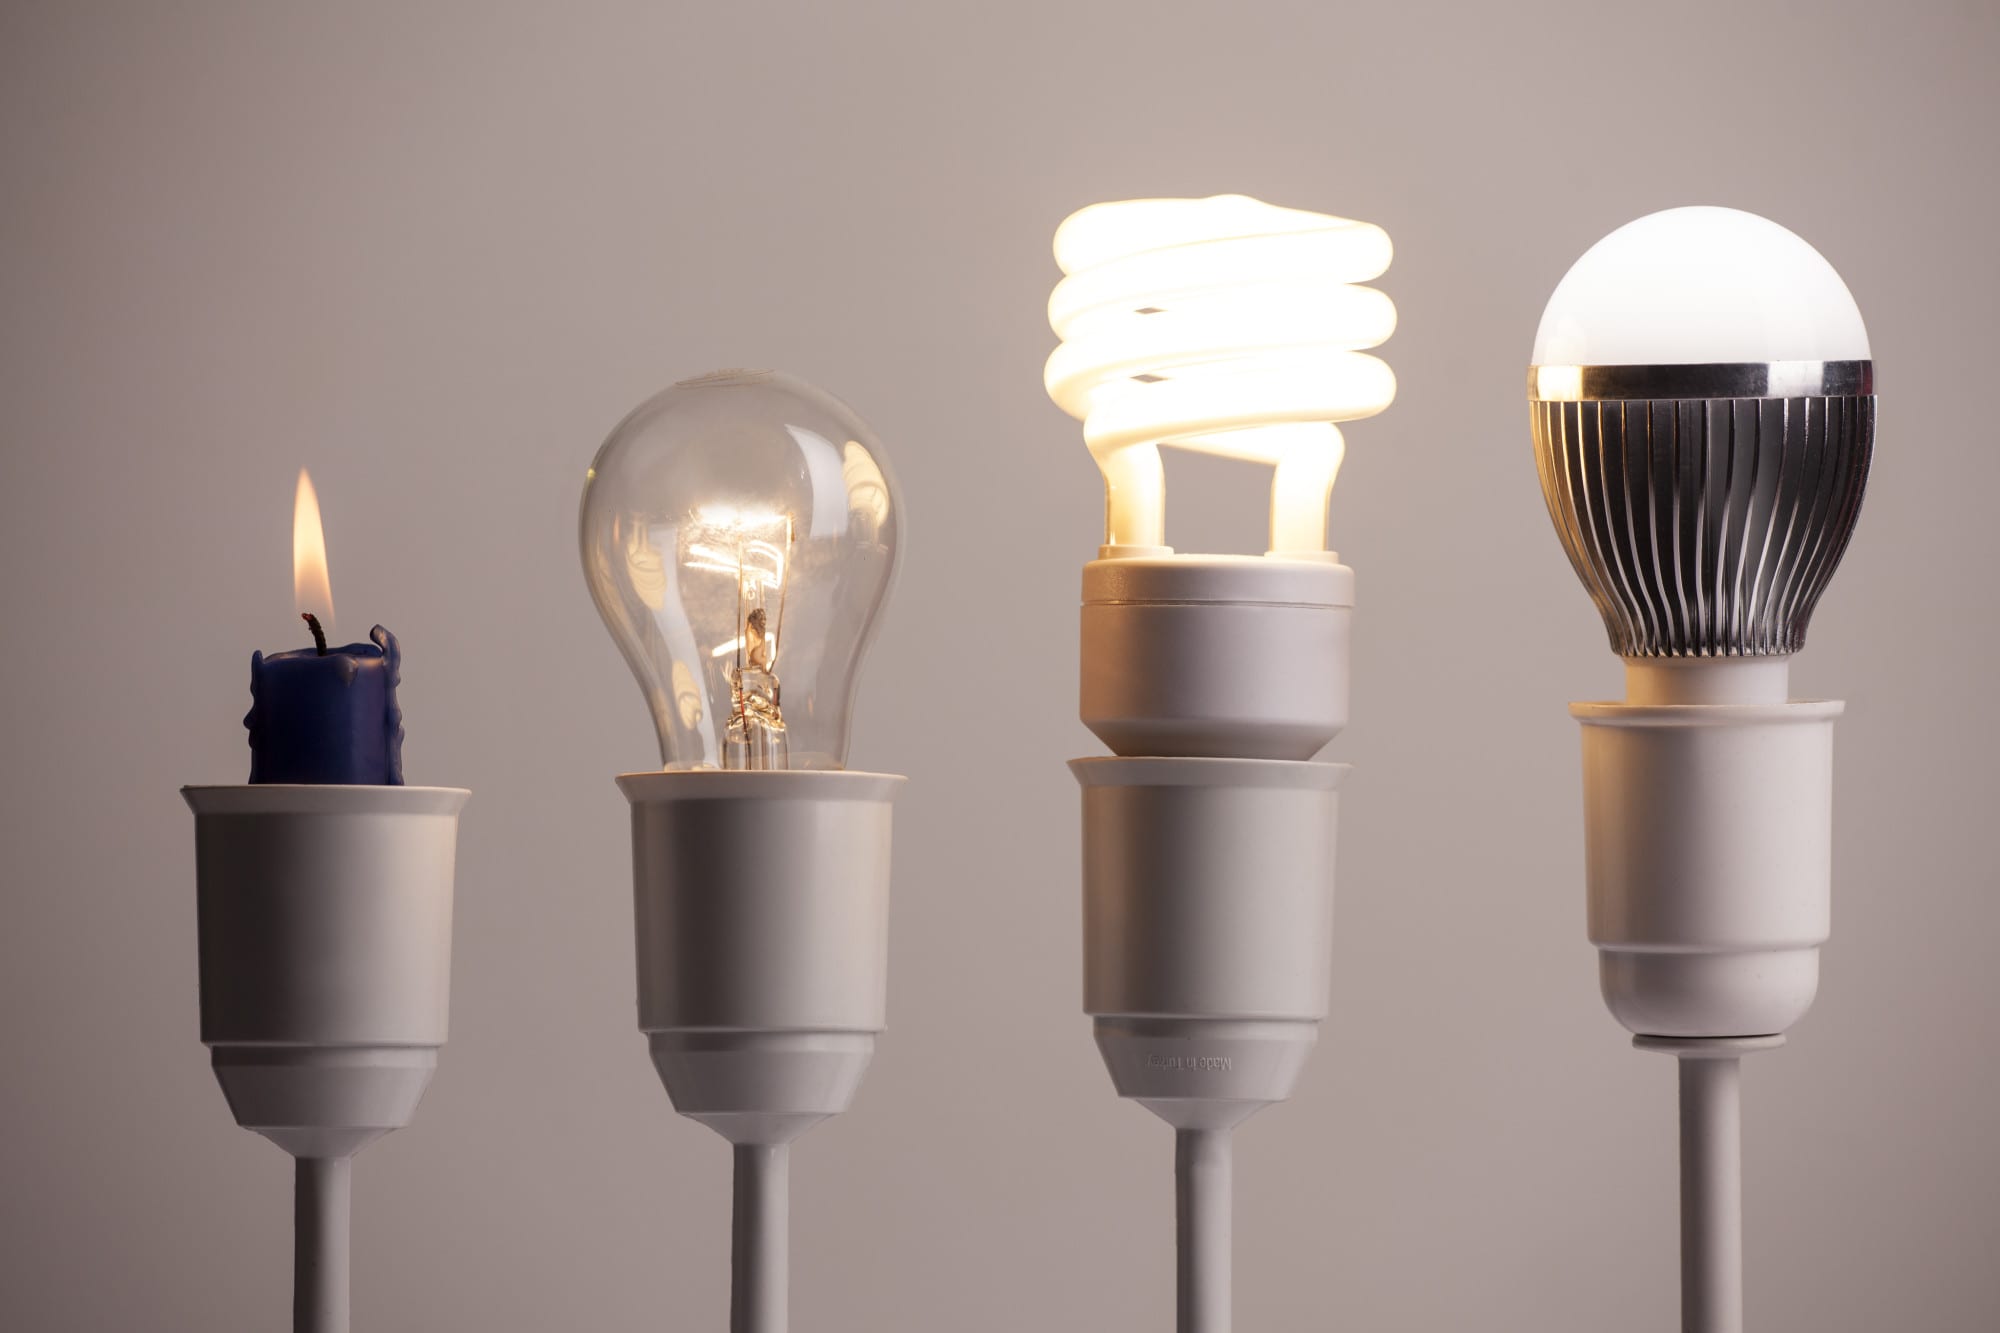 LED work light market